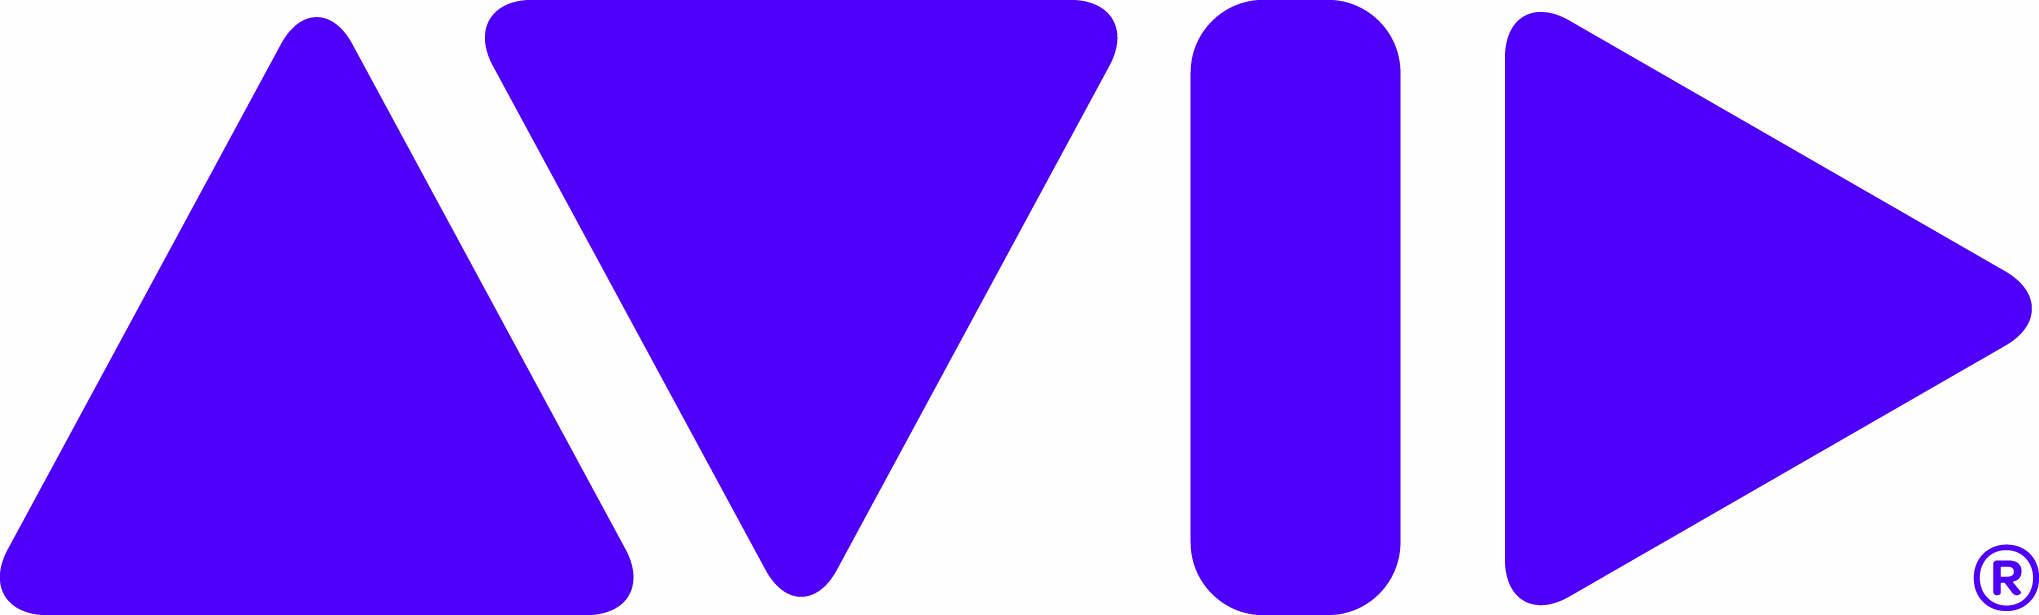 Avid_logo_purple